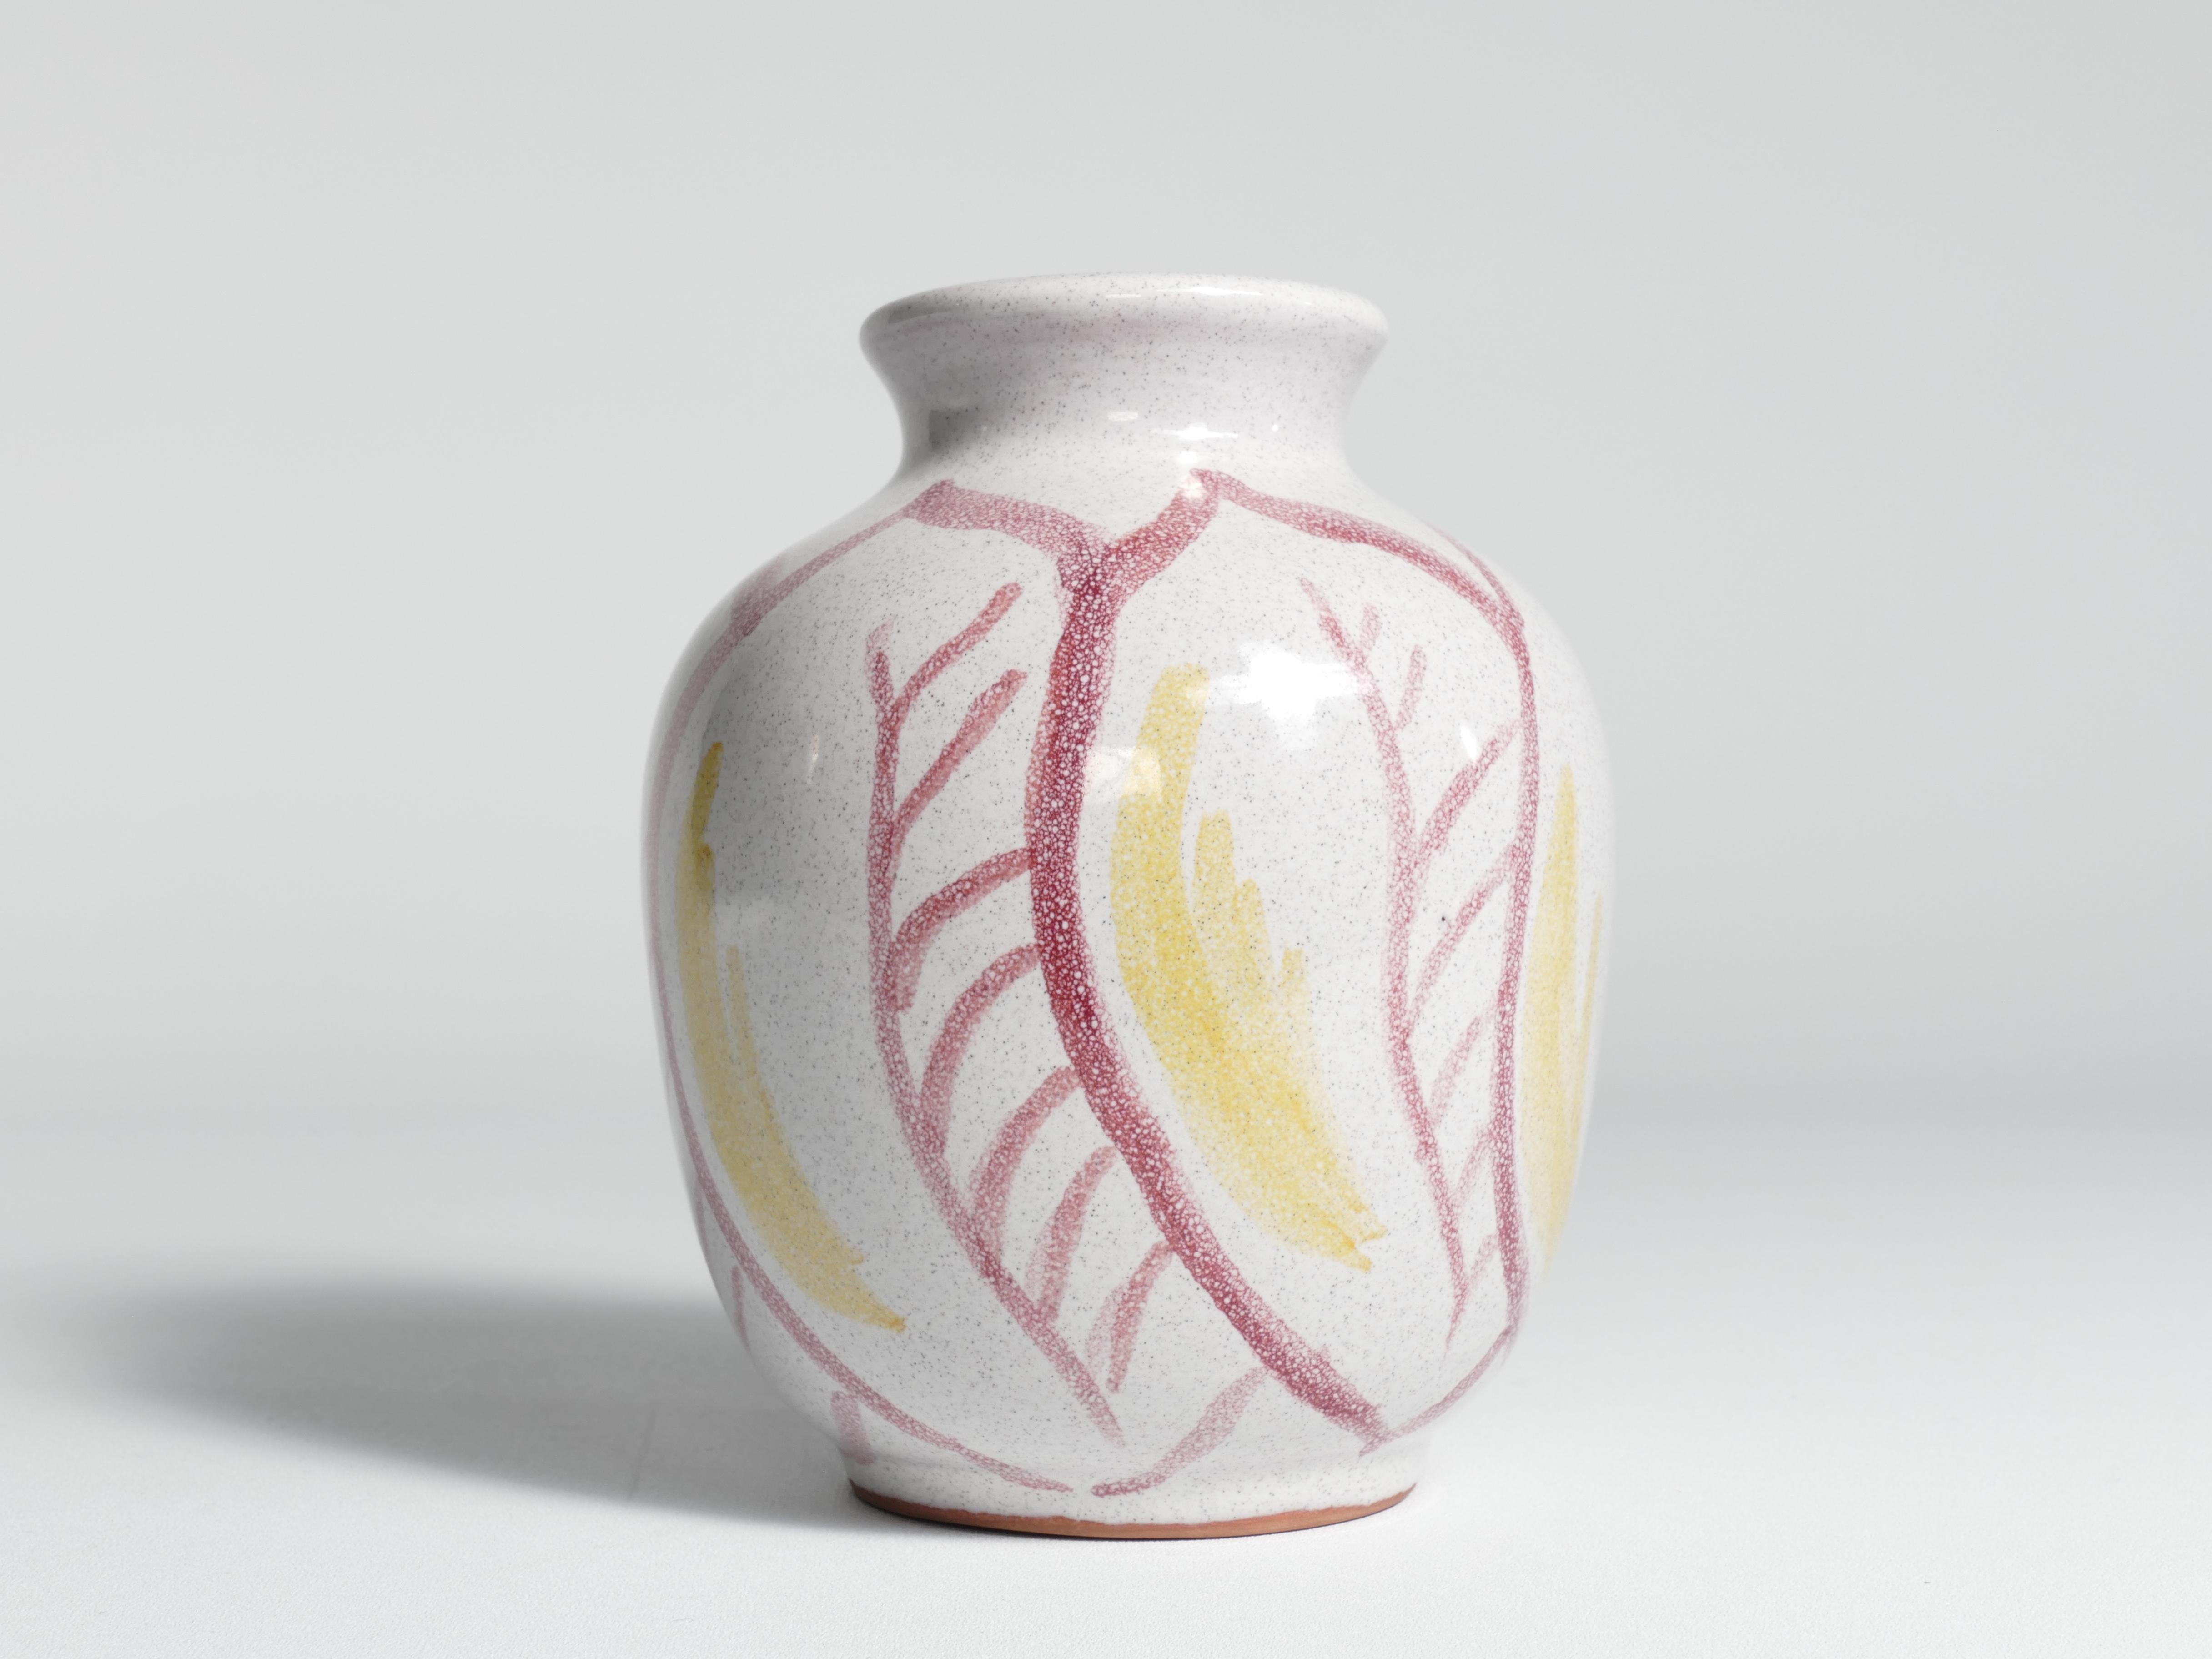 Scandinavian Modern Ceramic Vase with Red & Yellow Leaves, Alingsås Keramik 1947 For Sale 1